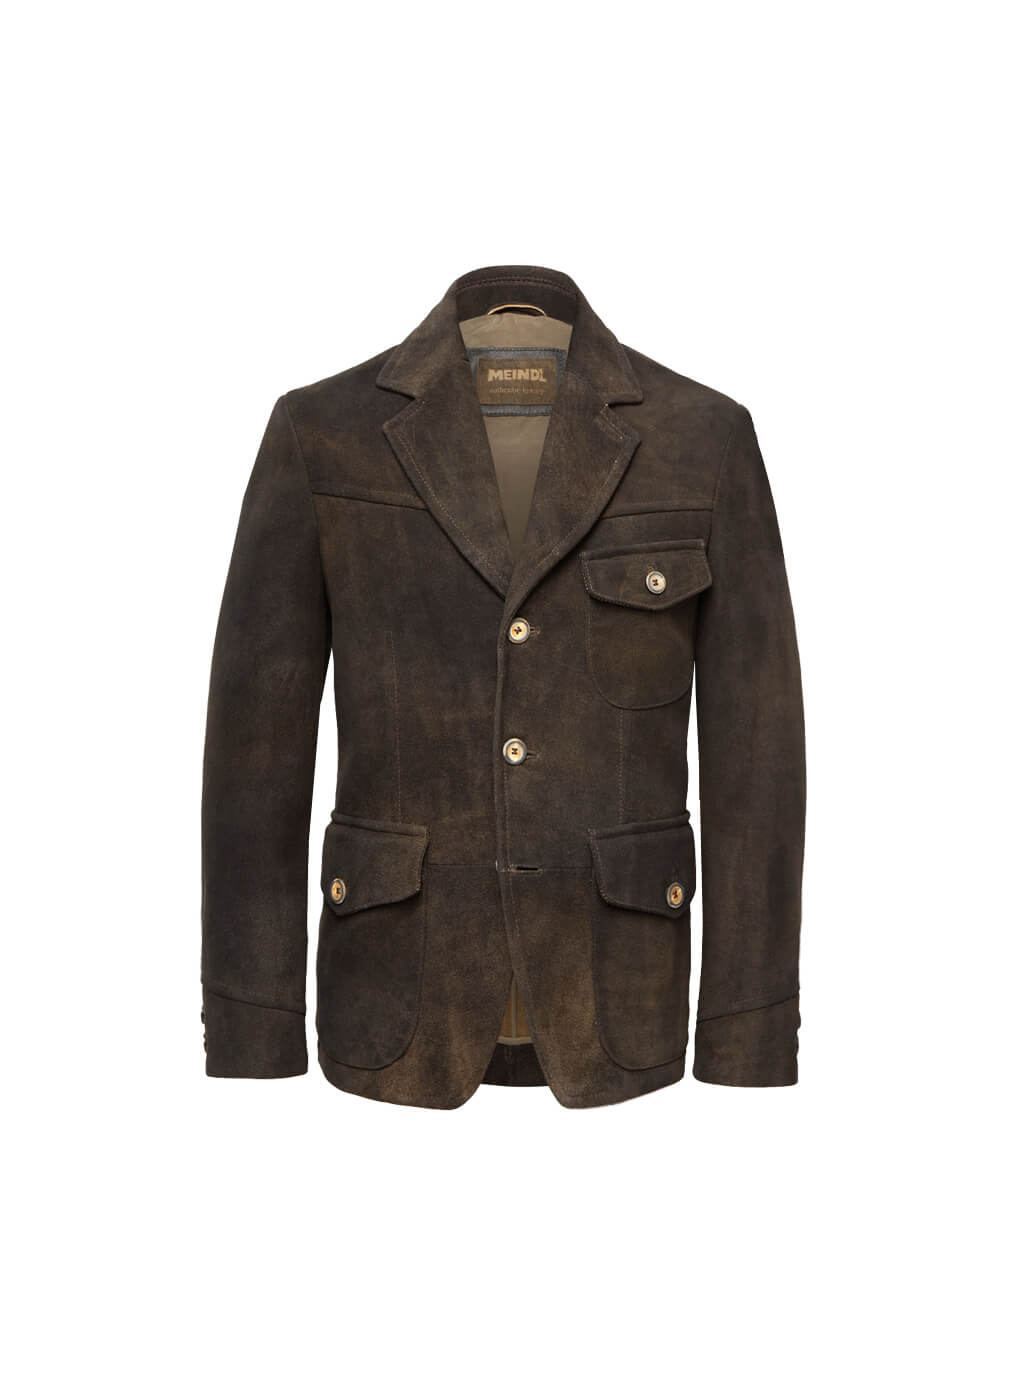 Dear Leather Jacket “East Coast”, maple